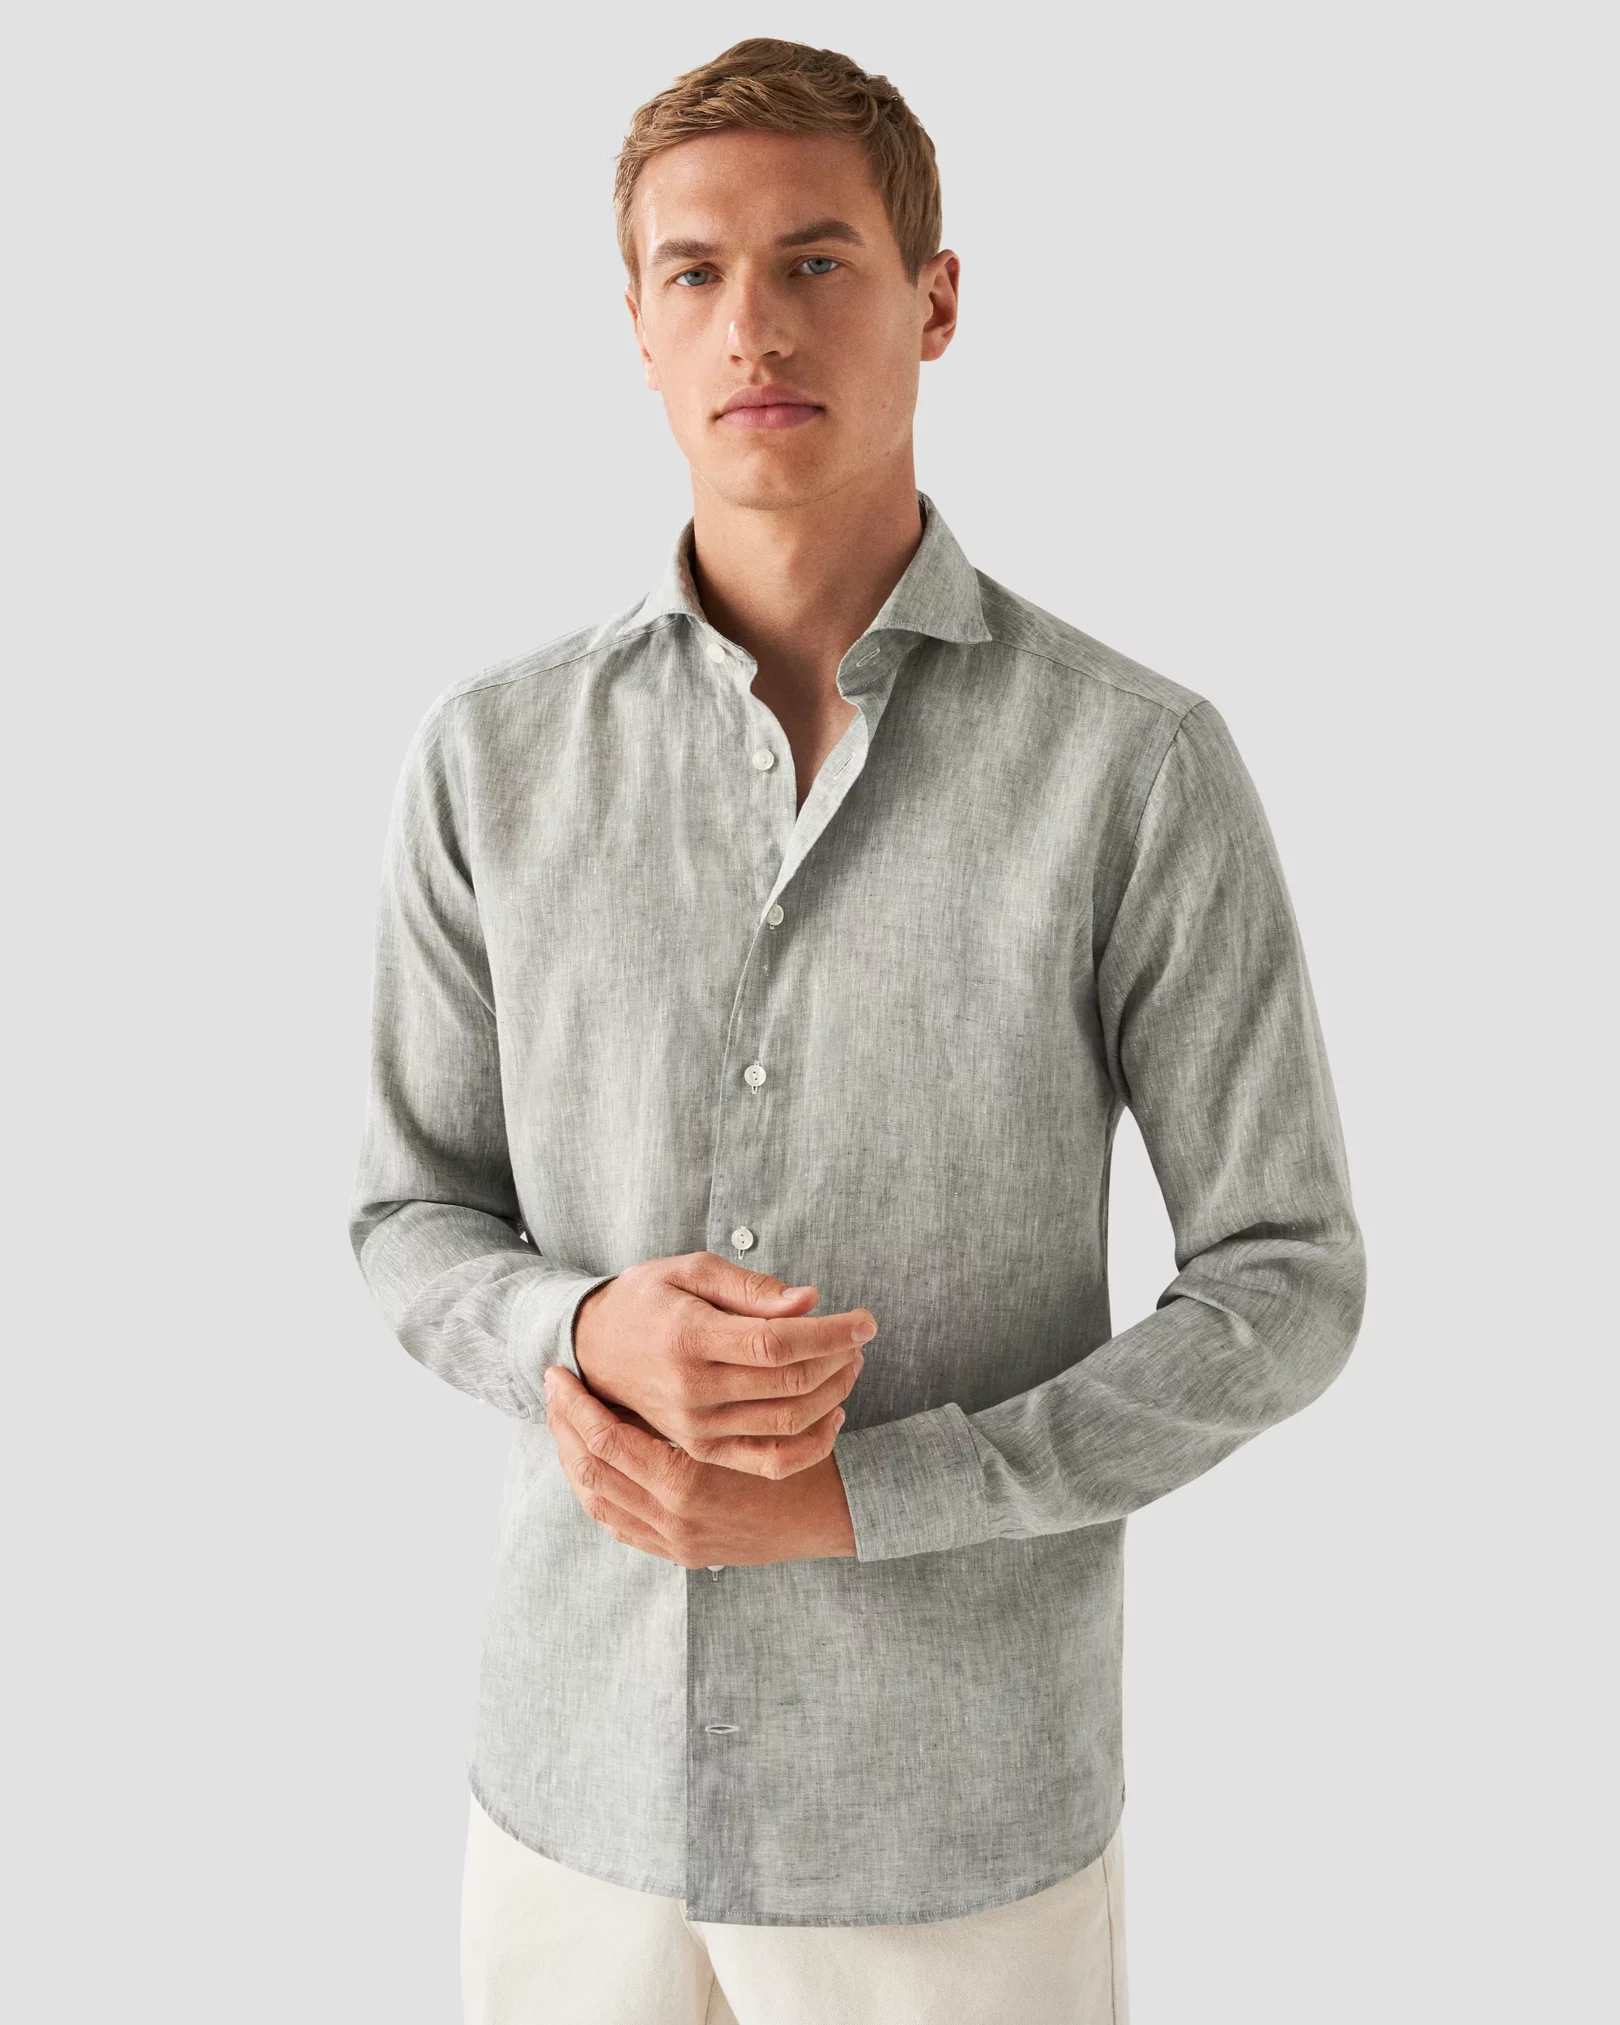 Linen blouse, Collection 2023